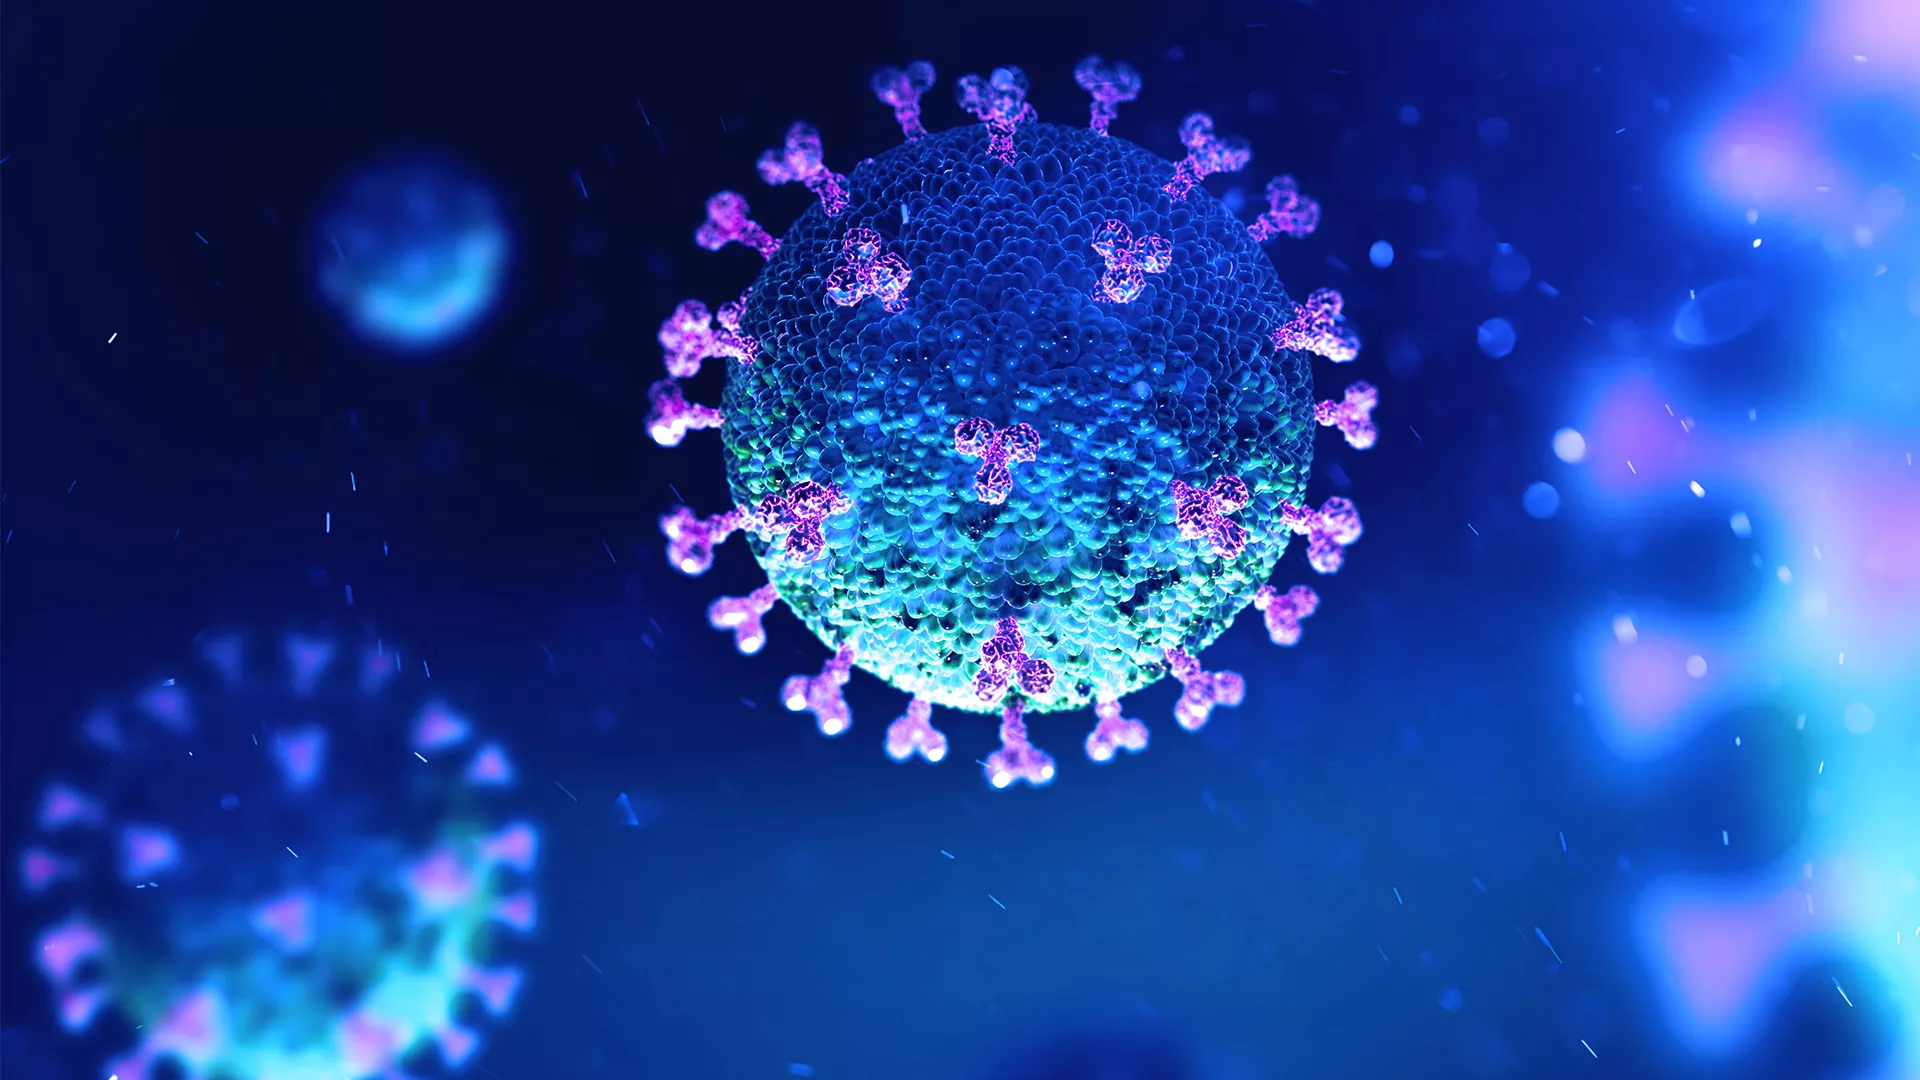 Corona Virus image in Blue Colour